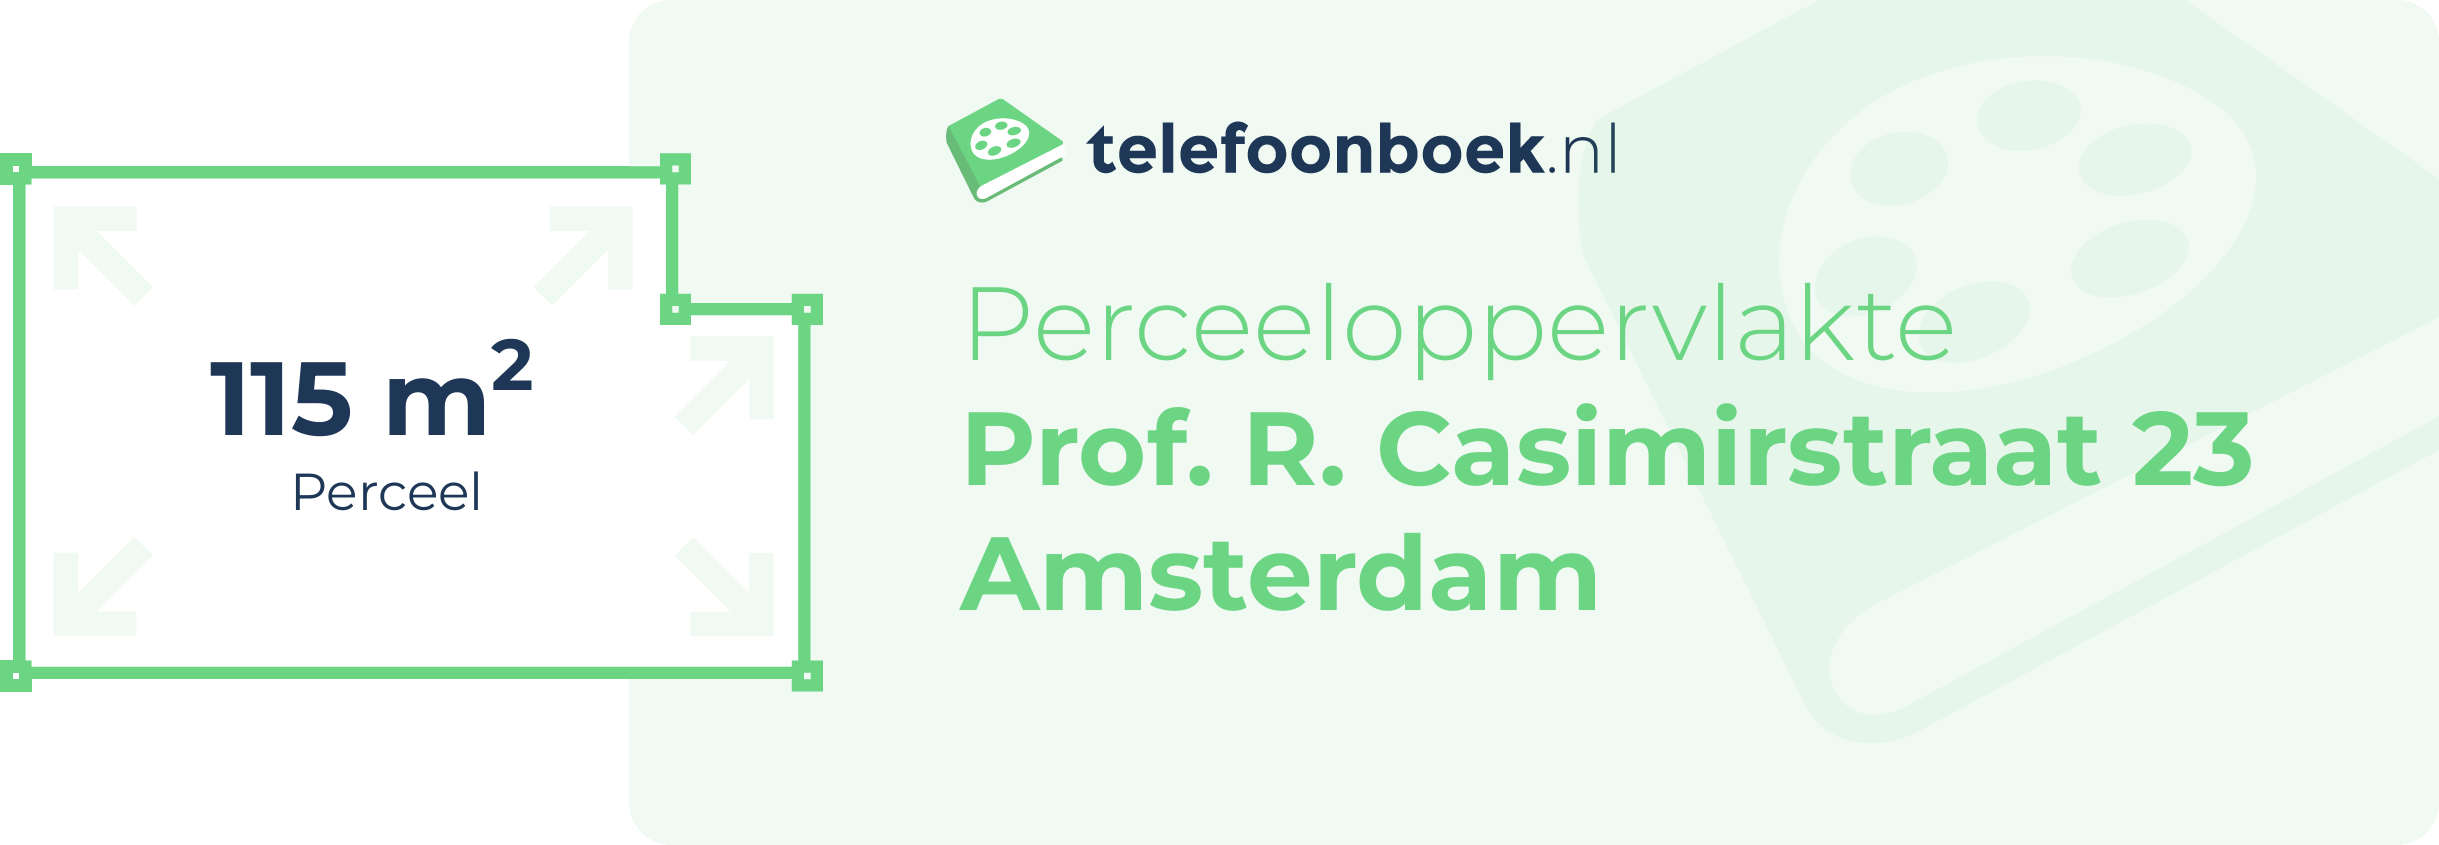 Perceeloppervlakte Prof. R. Casimirstraat 23 Amsterdam